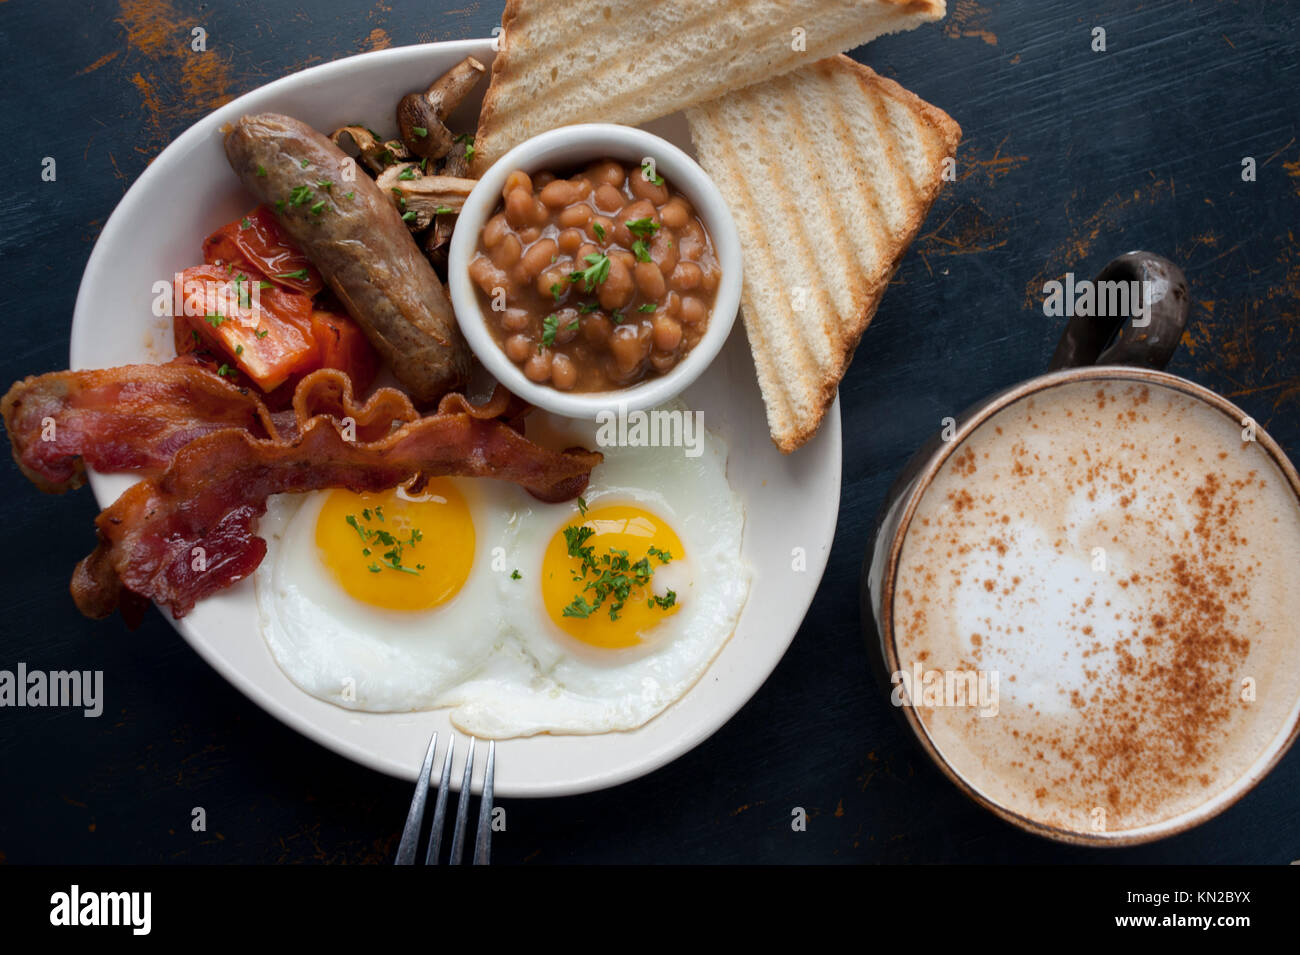 Comida un clásico desayuno inglés completo de huevos bacon o salchichas salchichas frijoles tomates setas y tostadas con café Foto de stock